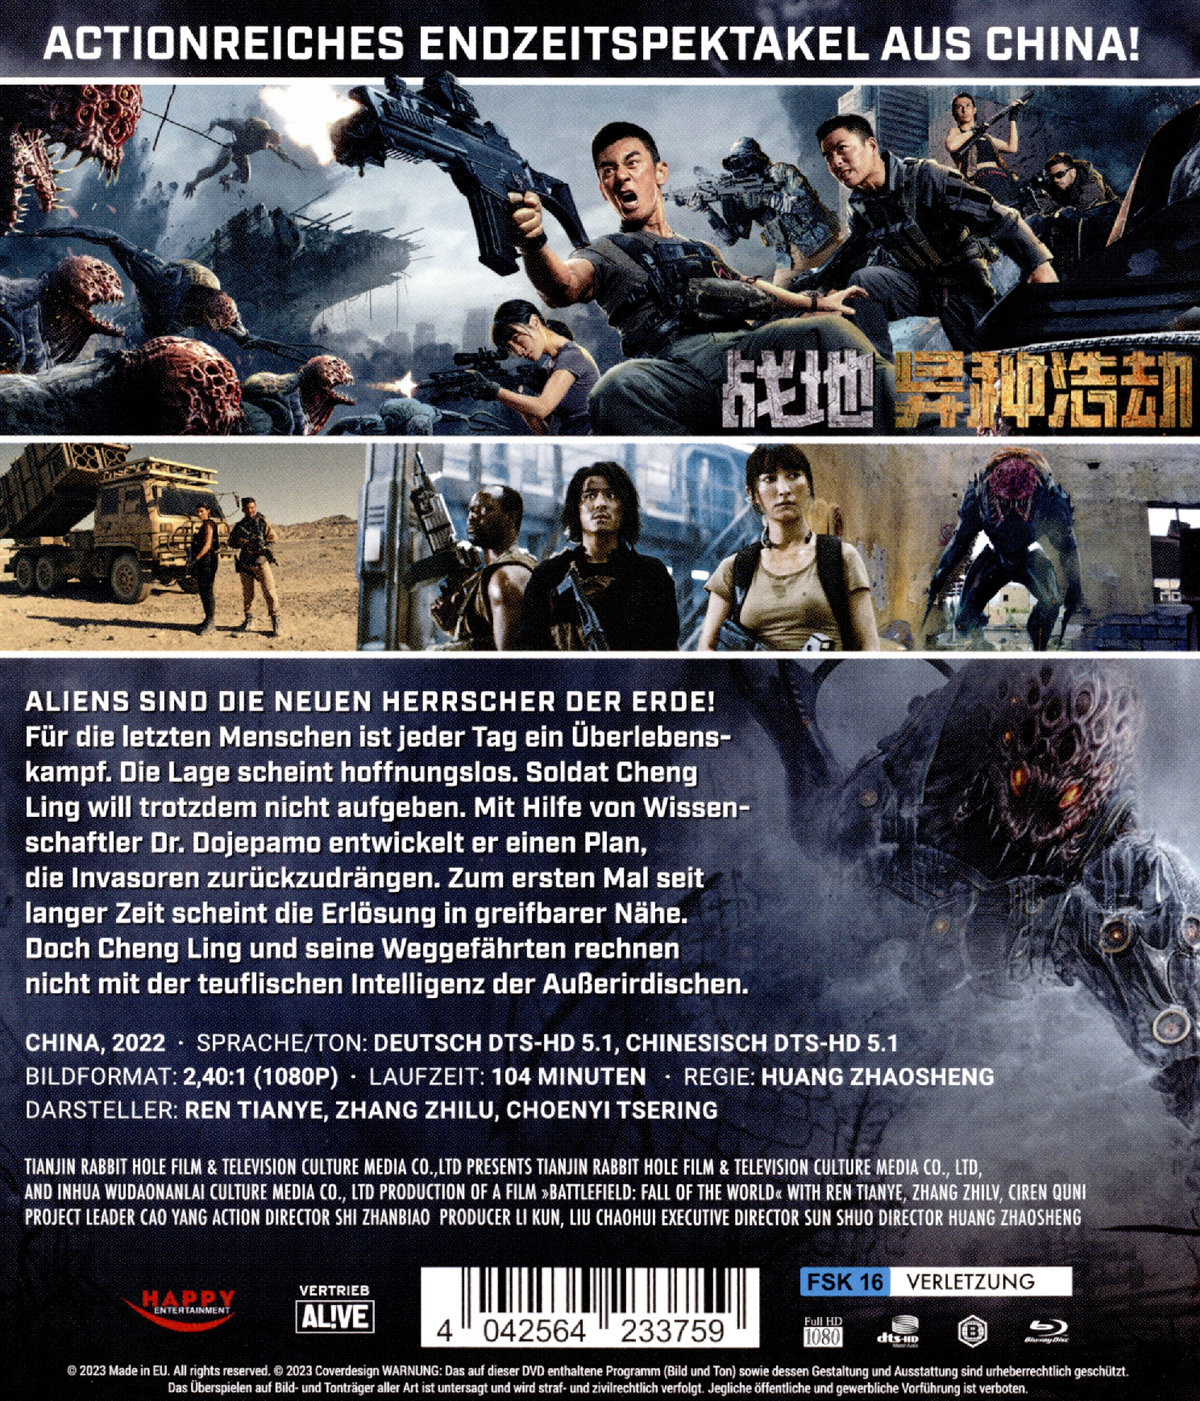 Battlefield: Fall of The World (blu-ray)